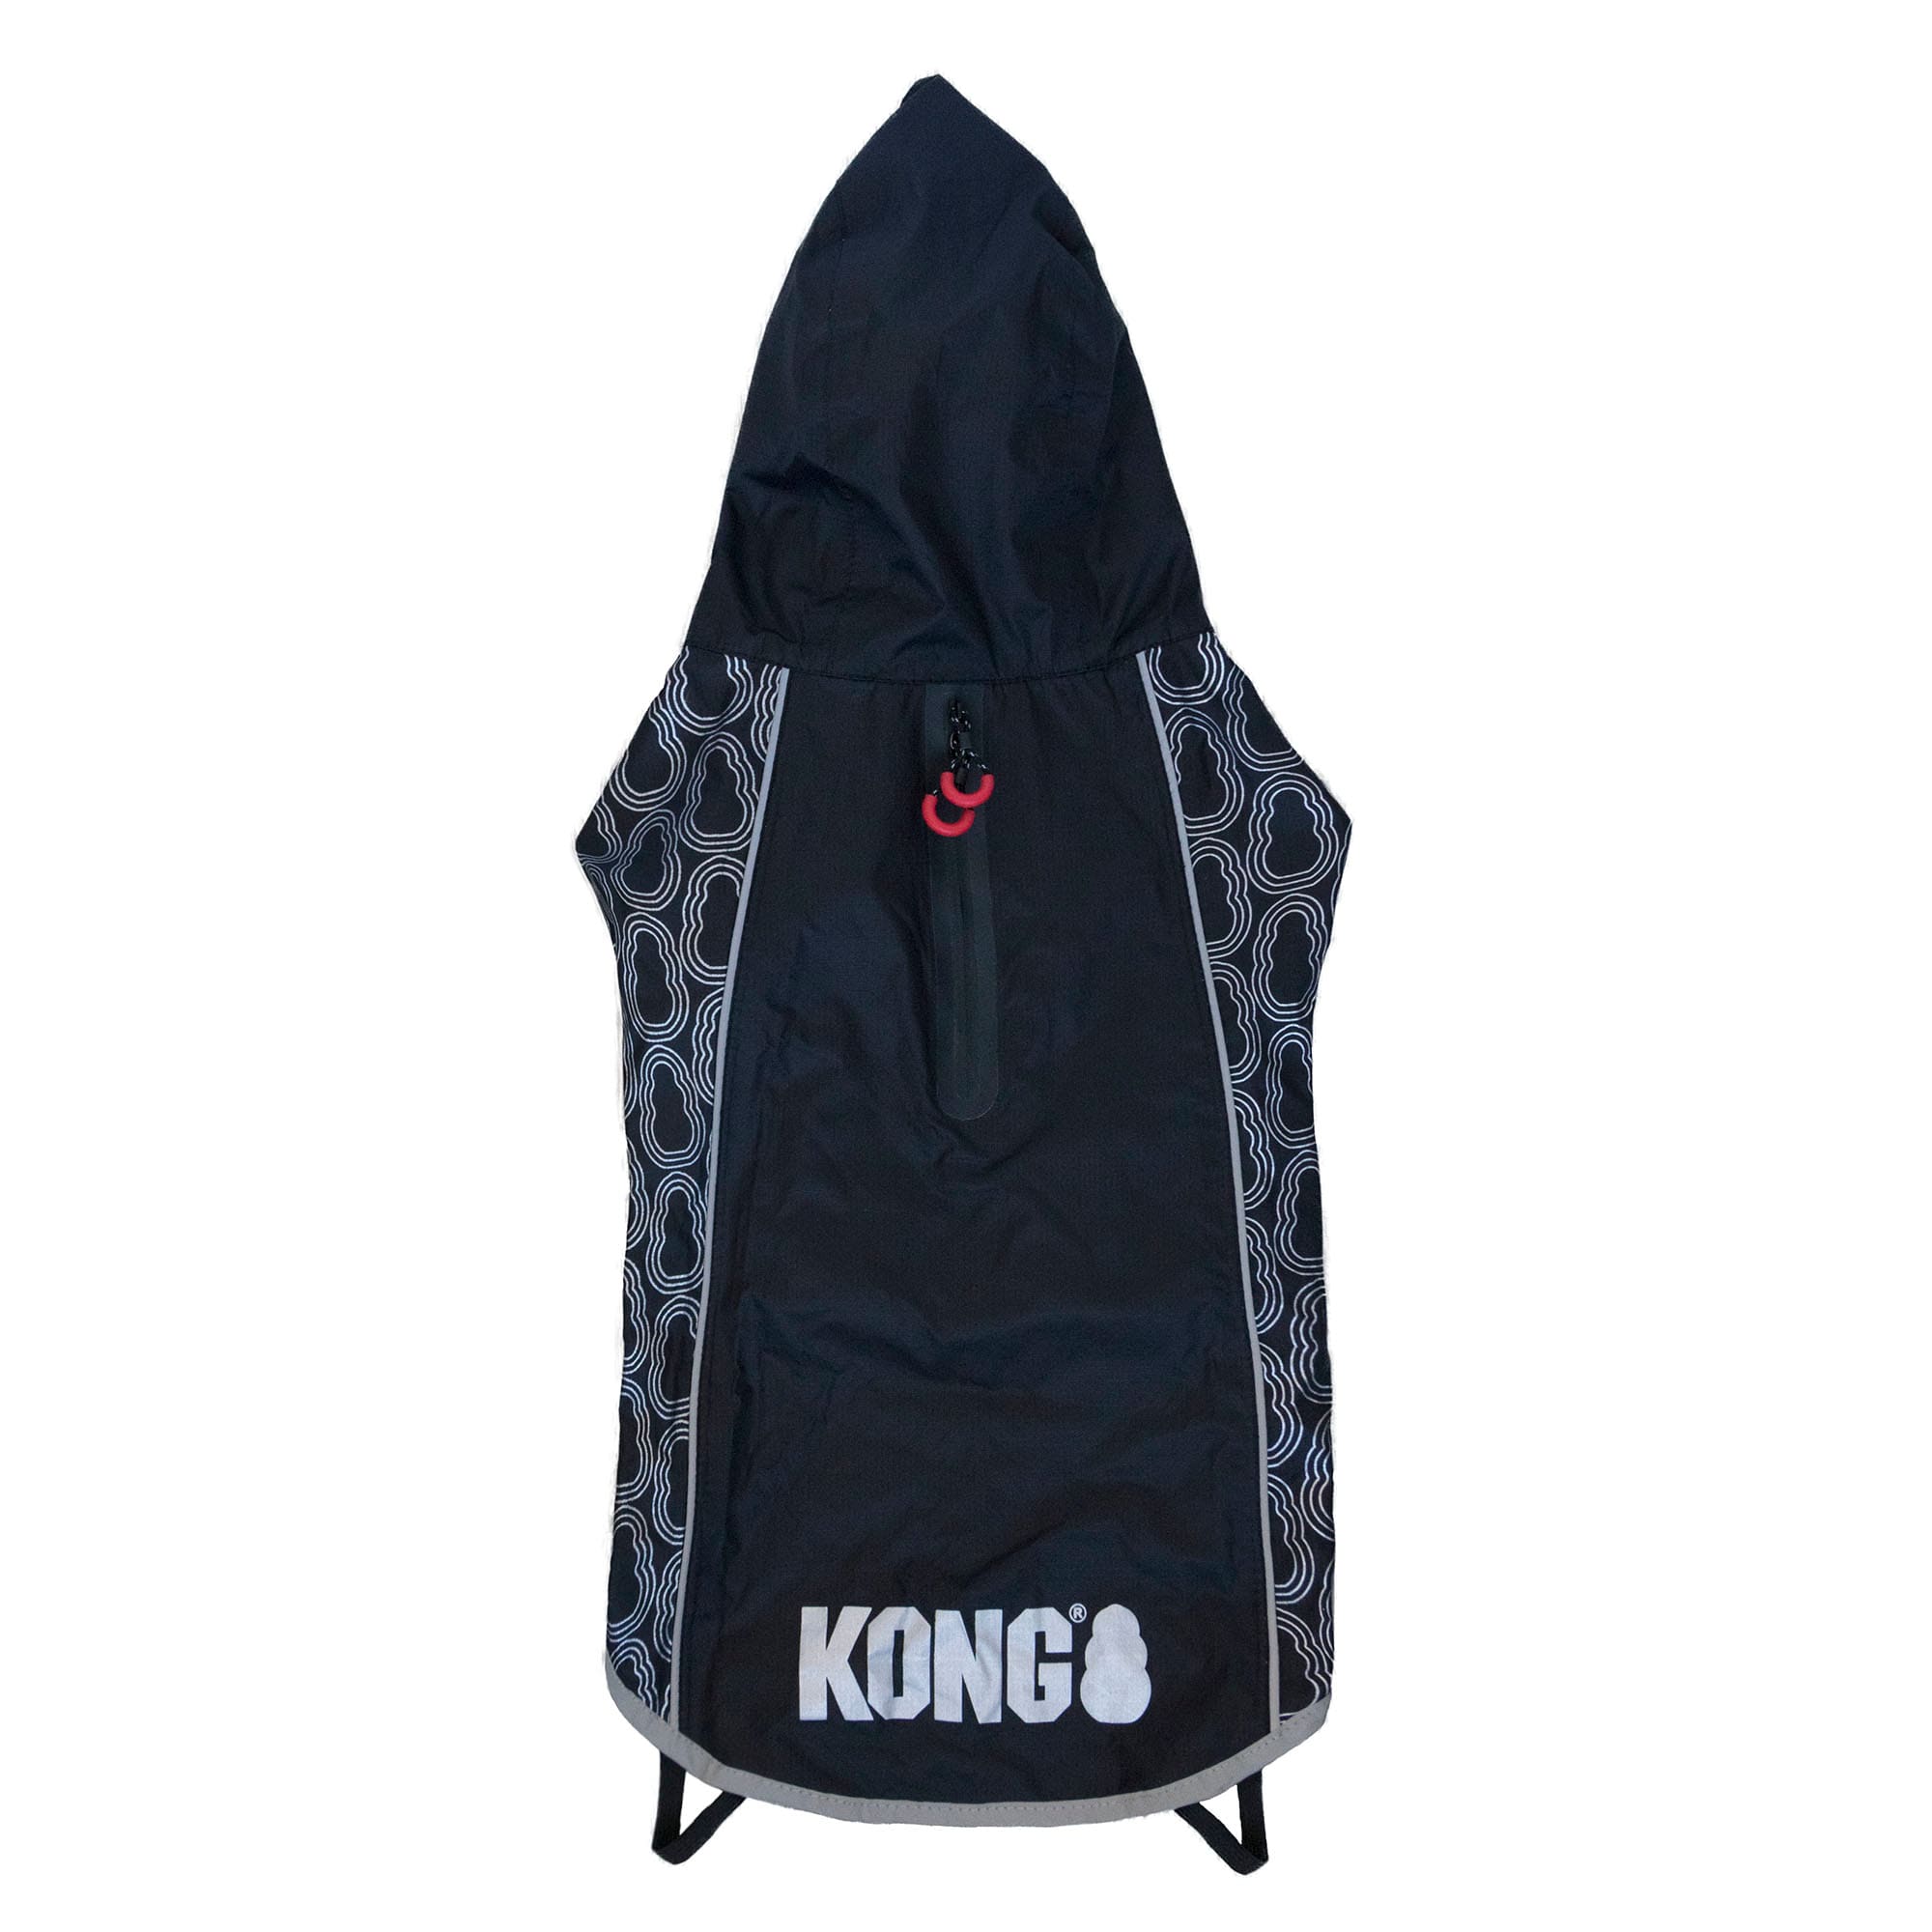 KONG Black Elements Dog Rain Jacket